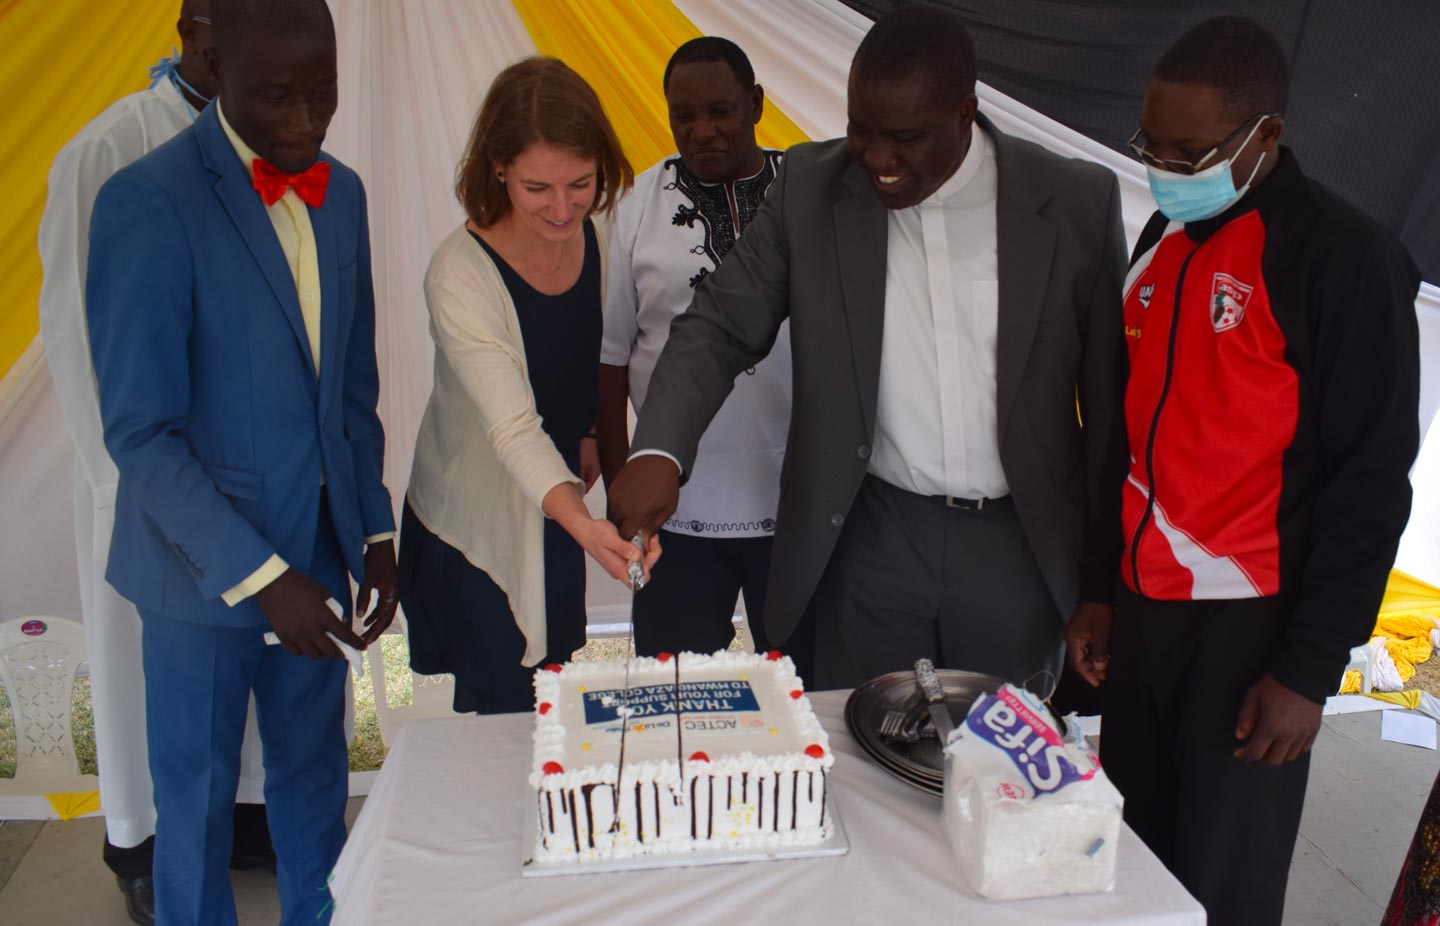 Mwangaza College people cutting a cake